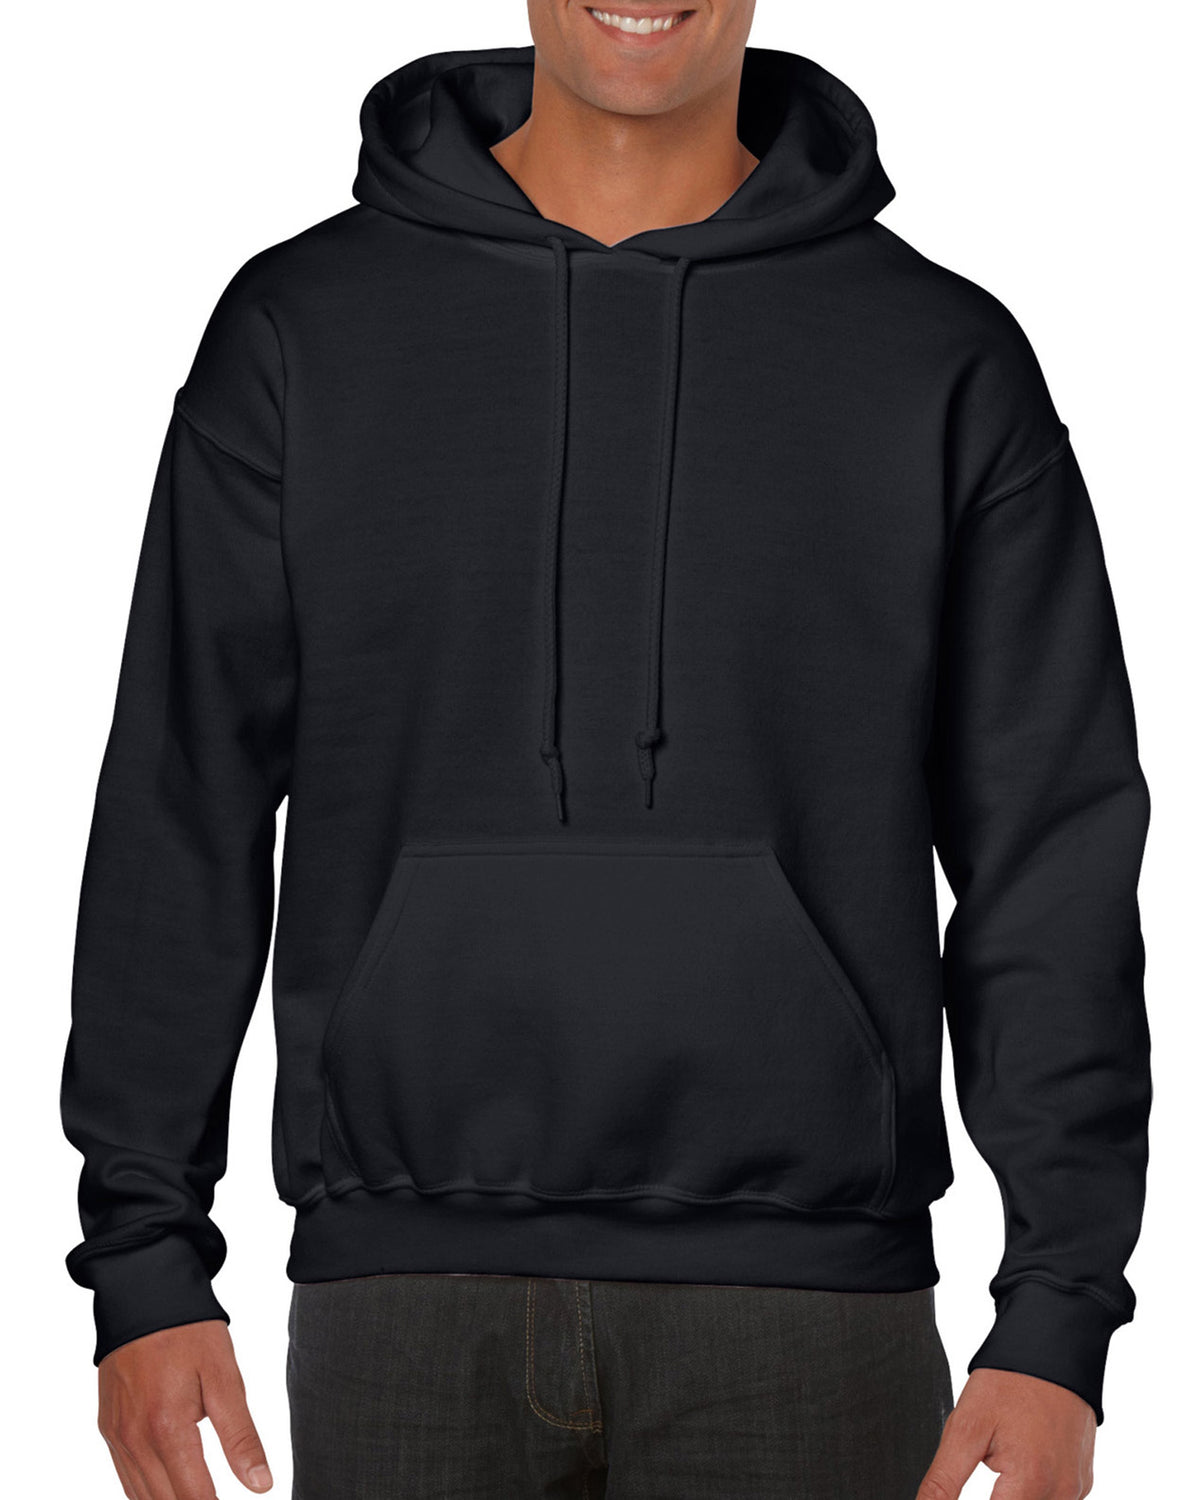 Gildan Unisex Adult Full Zip Hooded Sweatshirt Top